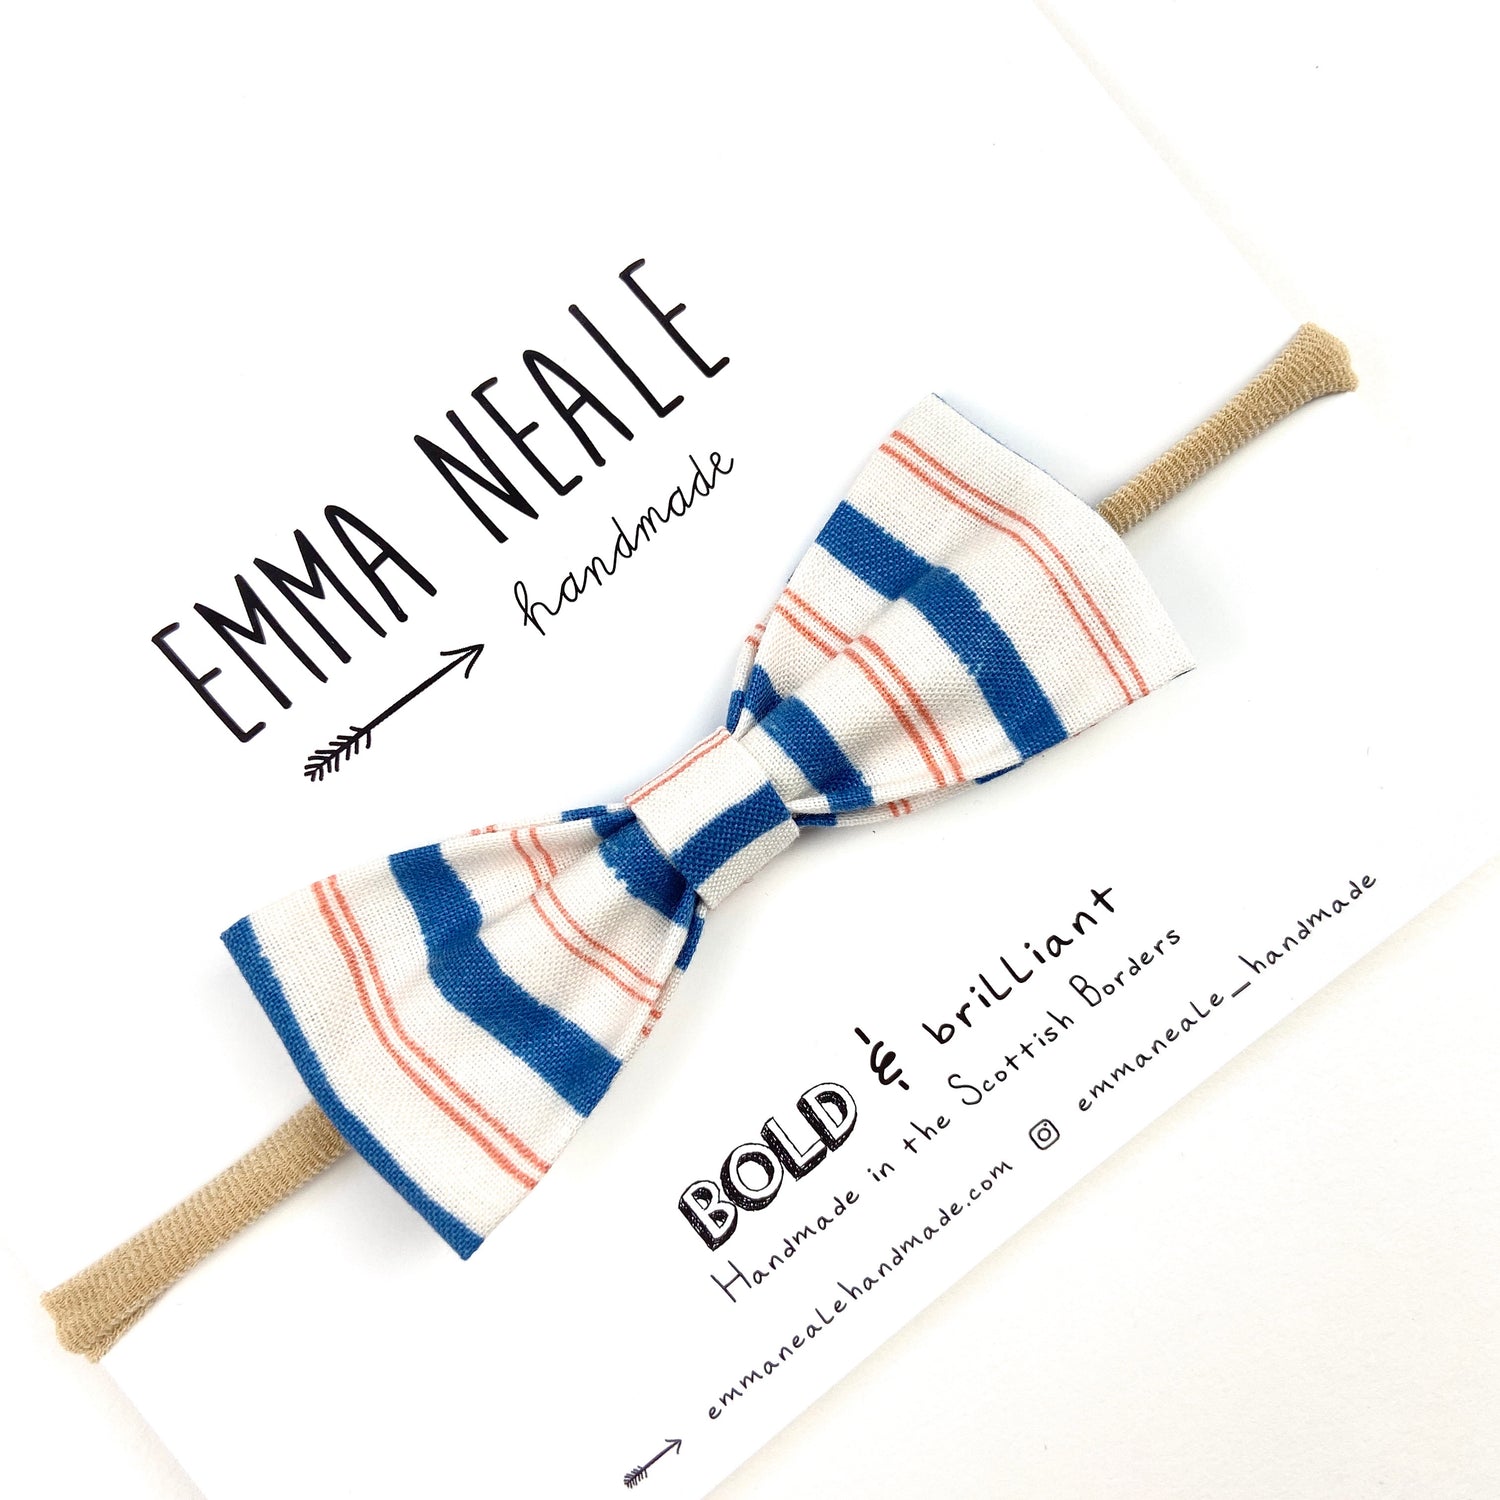 Stripe Ruby Bow Headband - Emma Neale Handmade